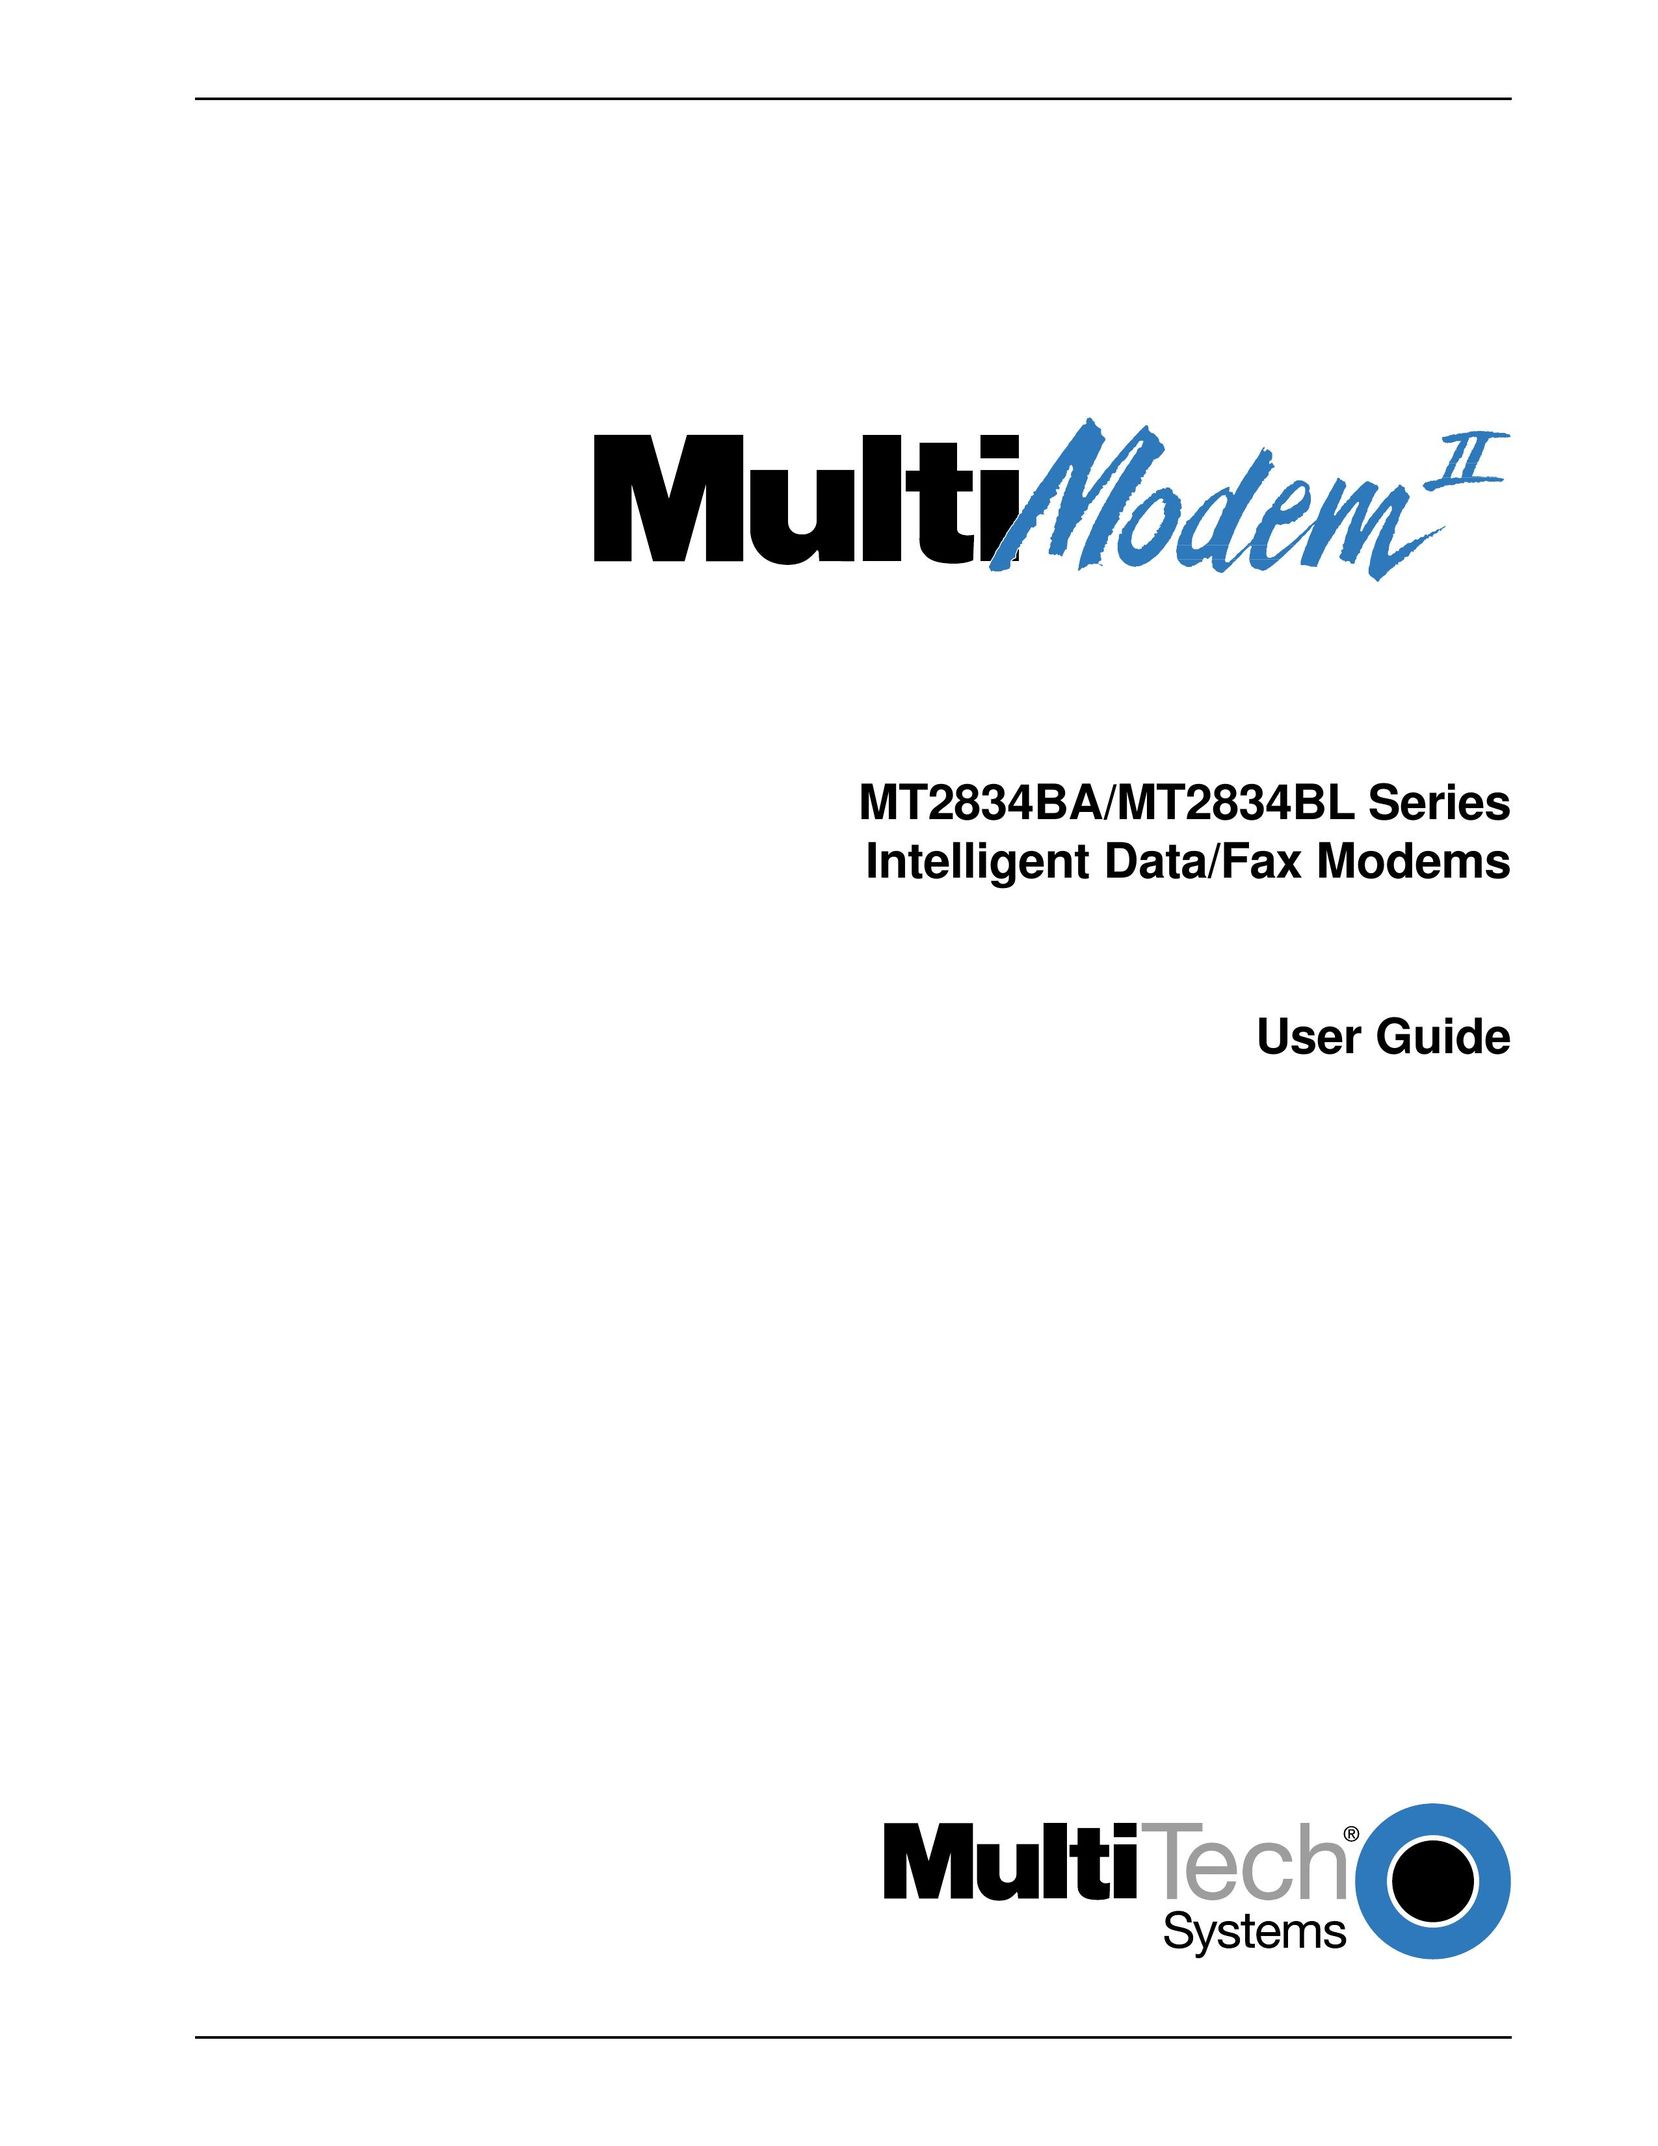 Multi-Tech Systems MT2834BL Network Card User Manual